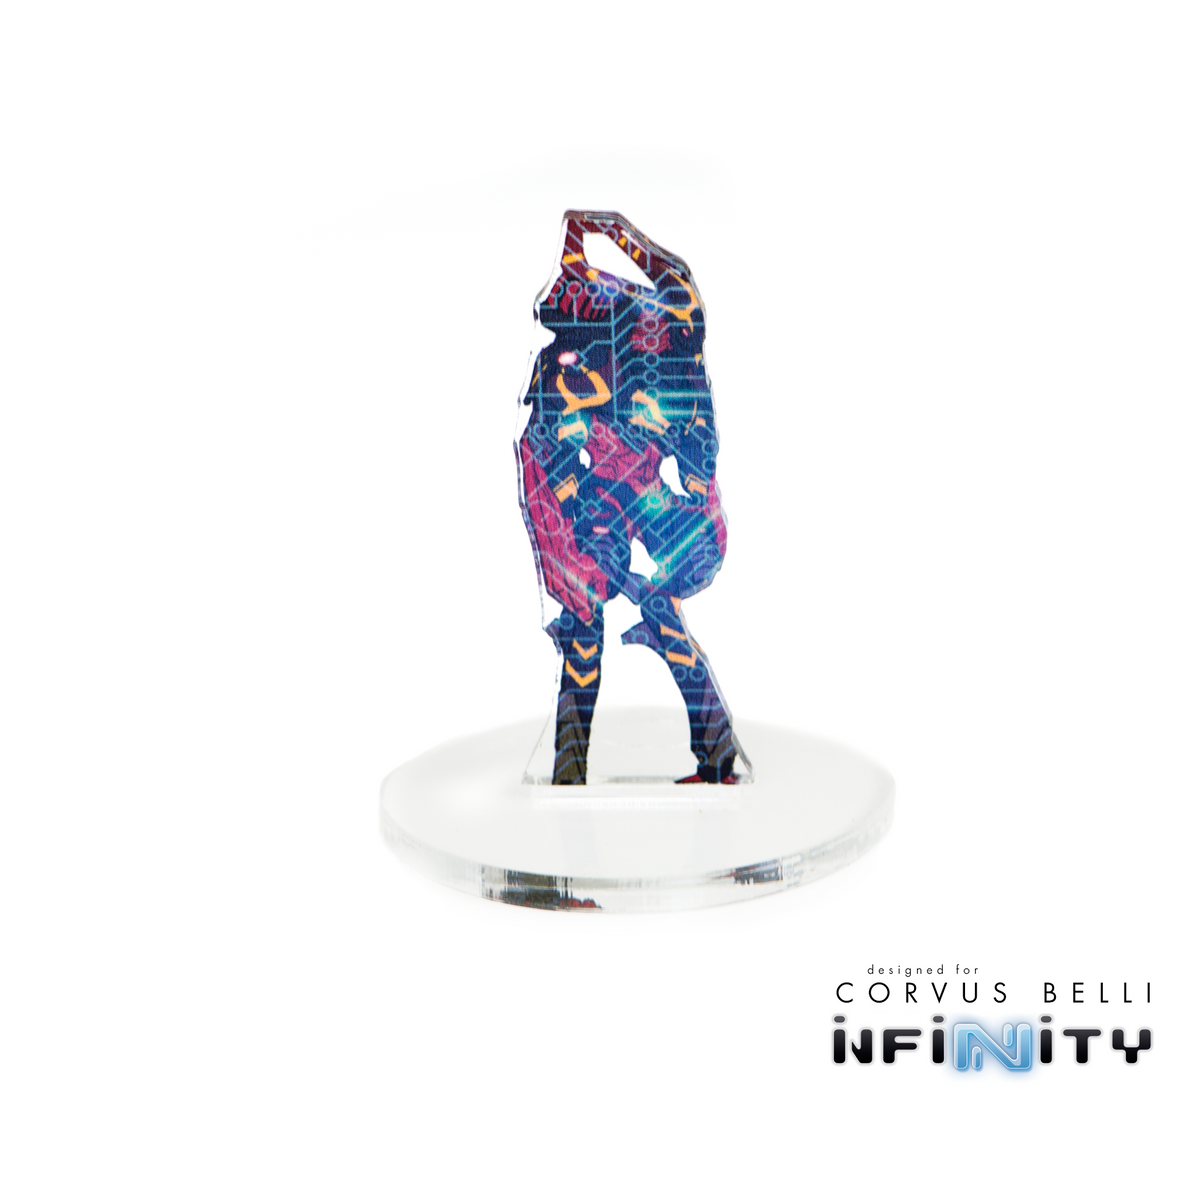 Marcadores 3D Infinity: Caróntida (Cibermáscara de 40 mm)